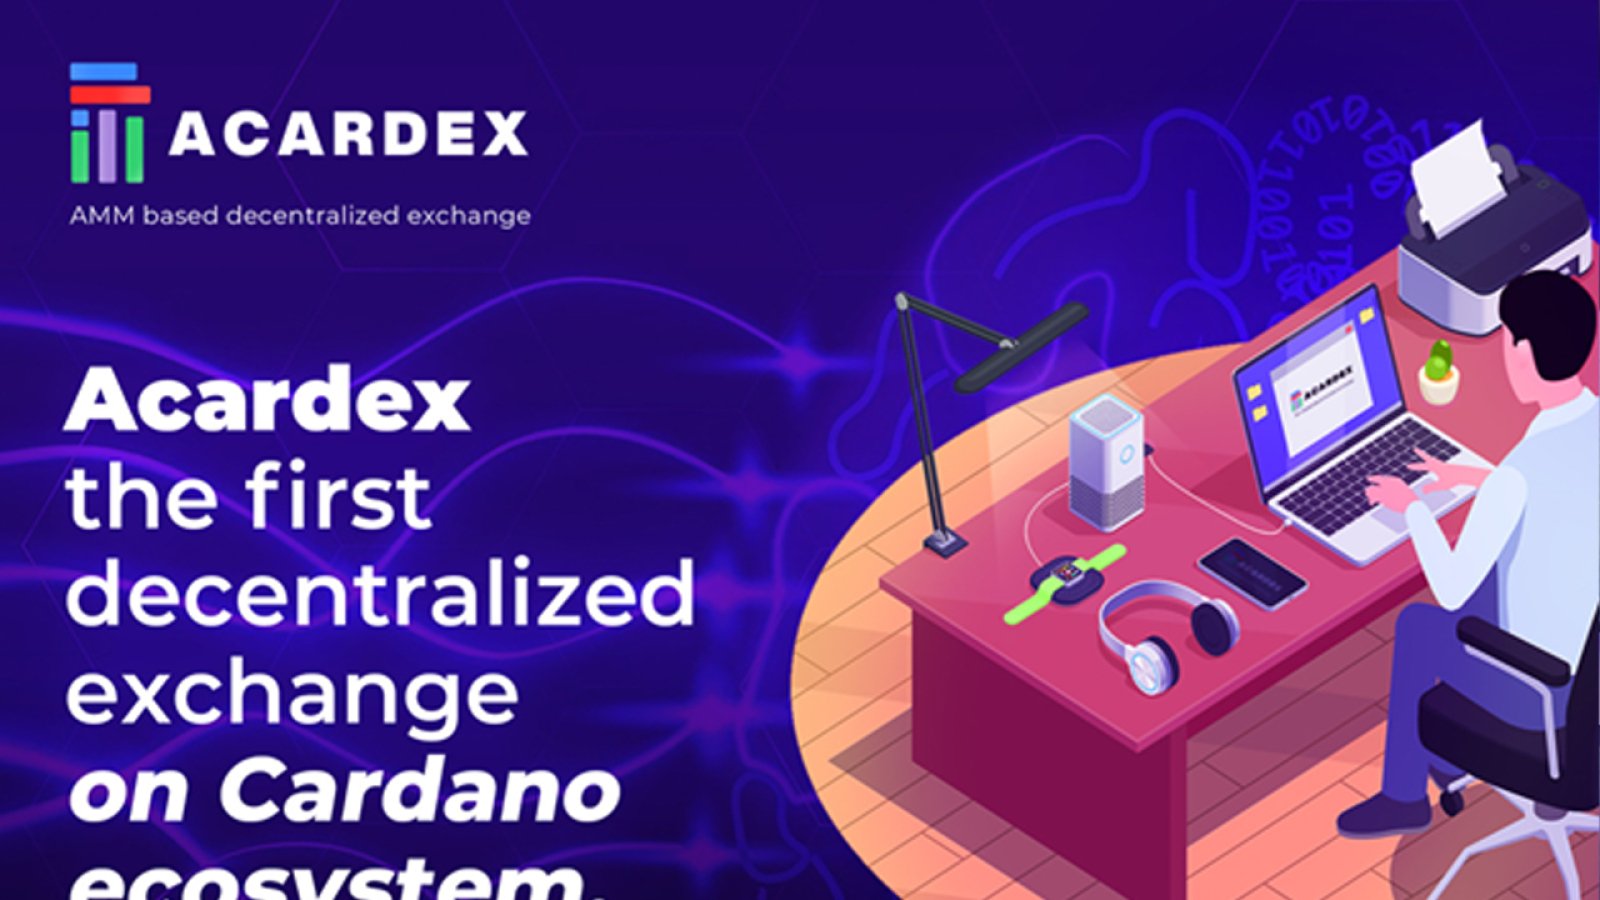 Cardano Defi Project Acardex Announces ACX Token Pre Sale